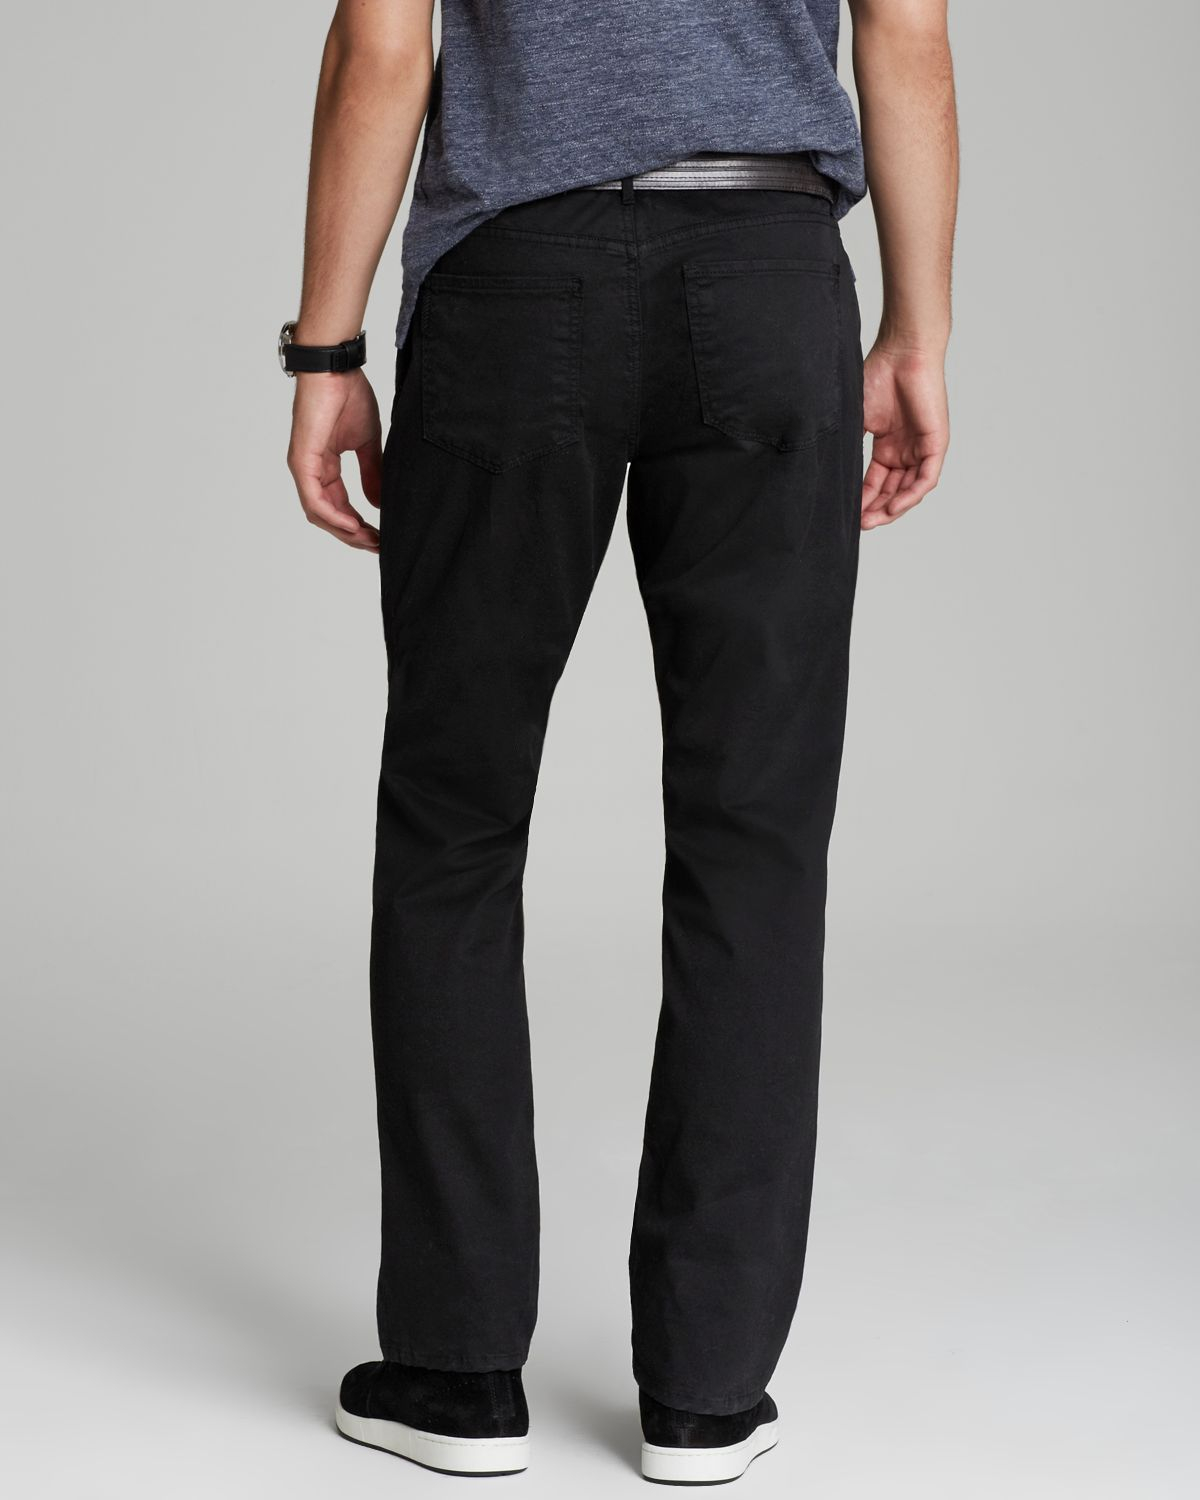 PAIGE Jeans - Normandie Straight Fit in Black Tie (Black) for Men - Lyst